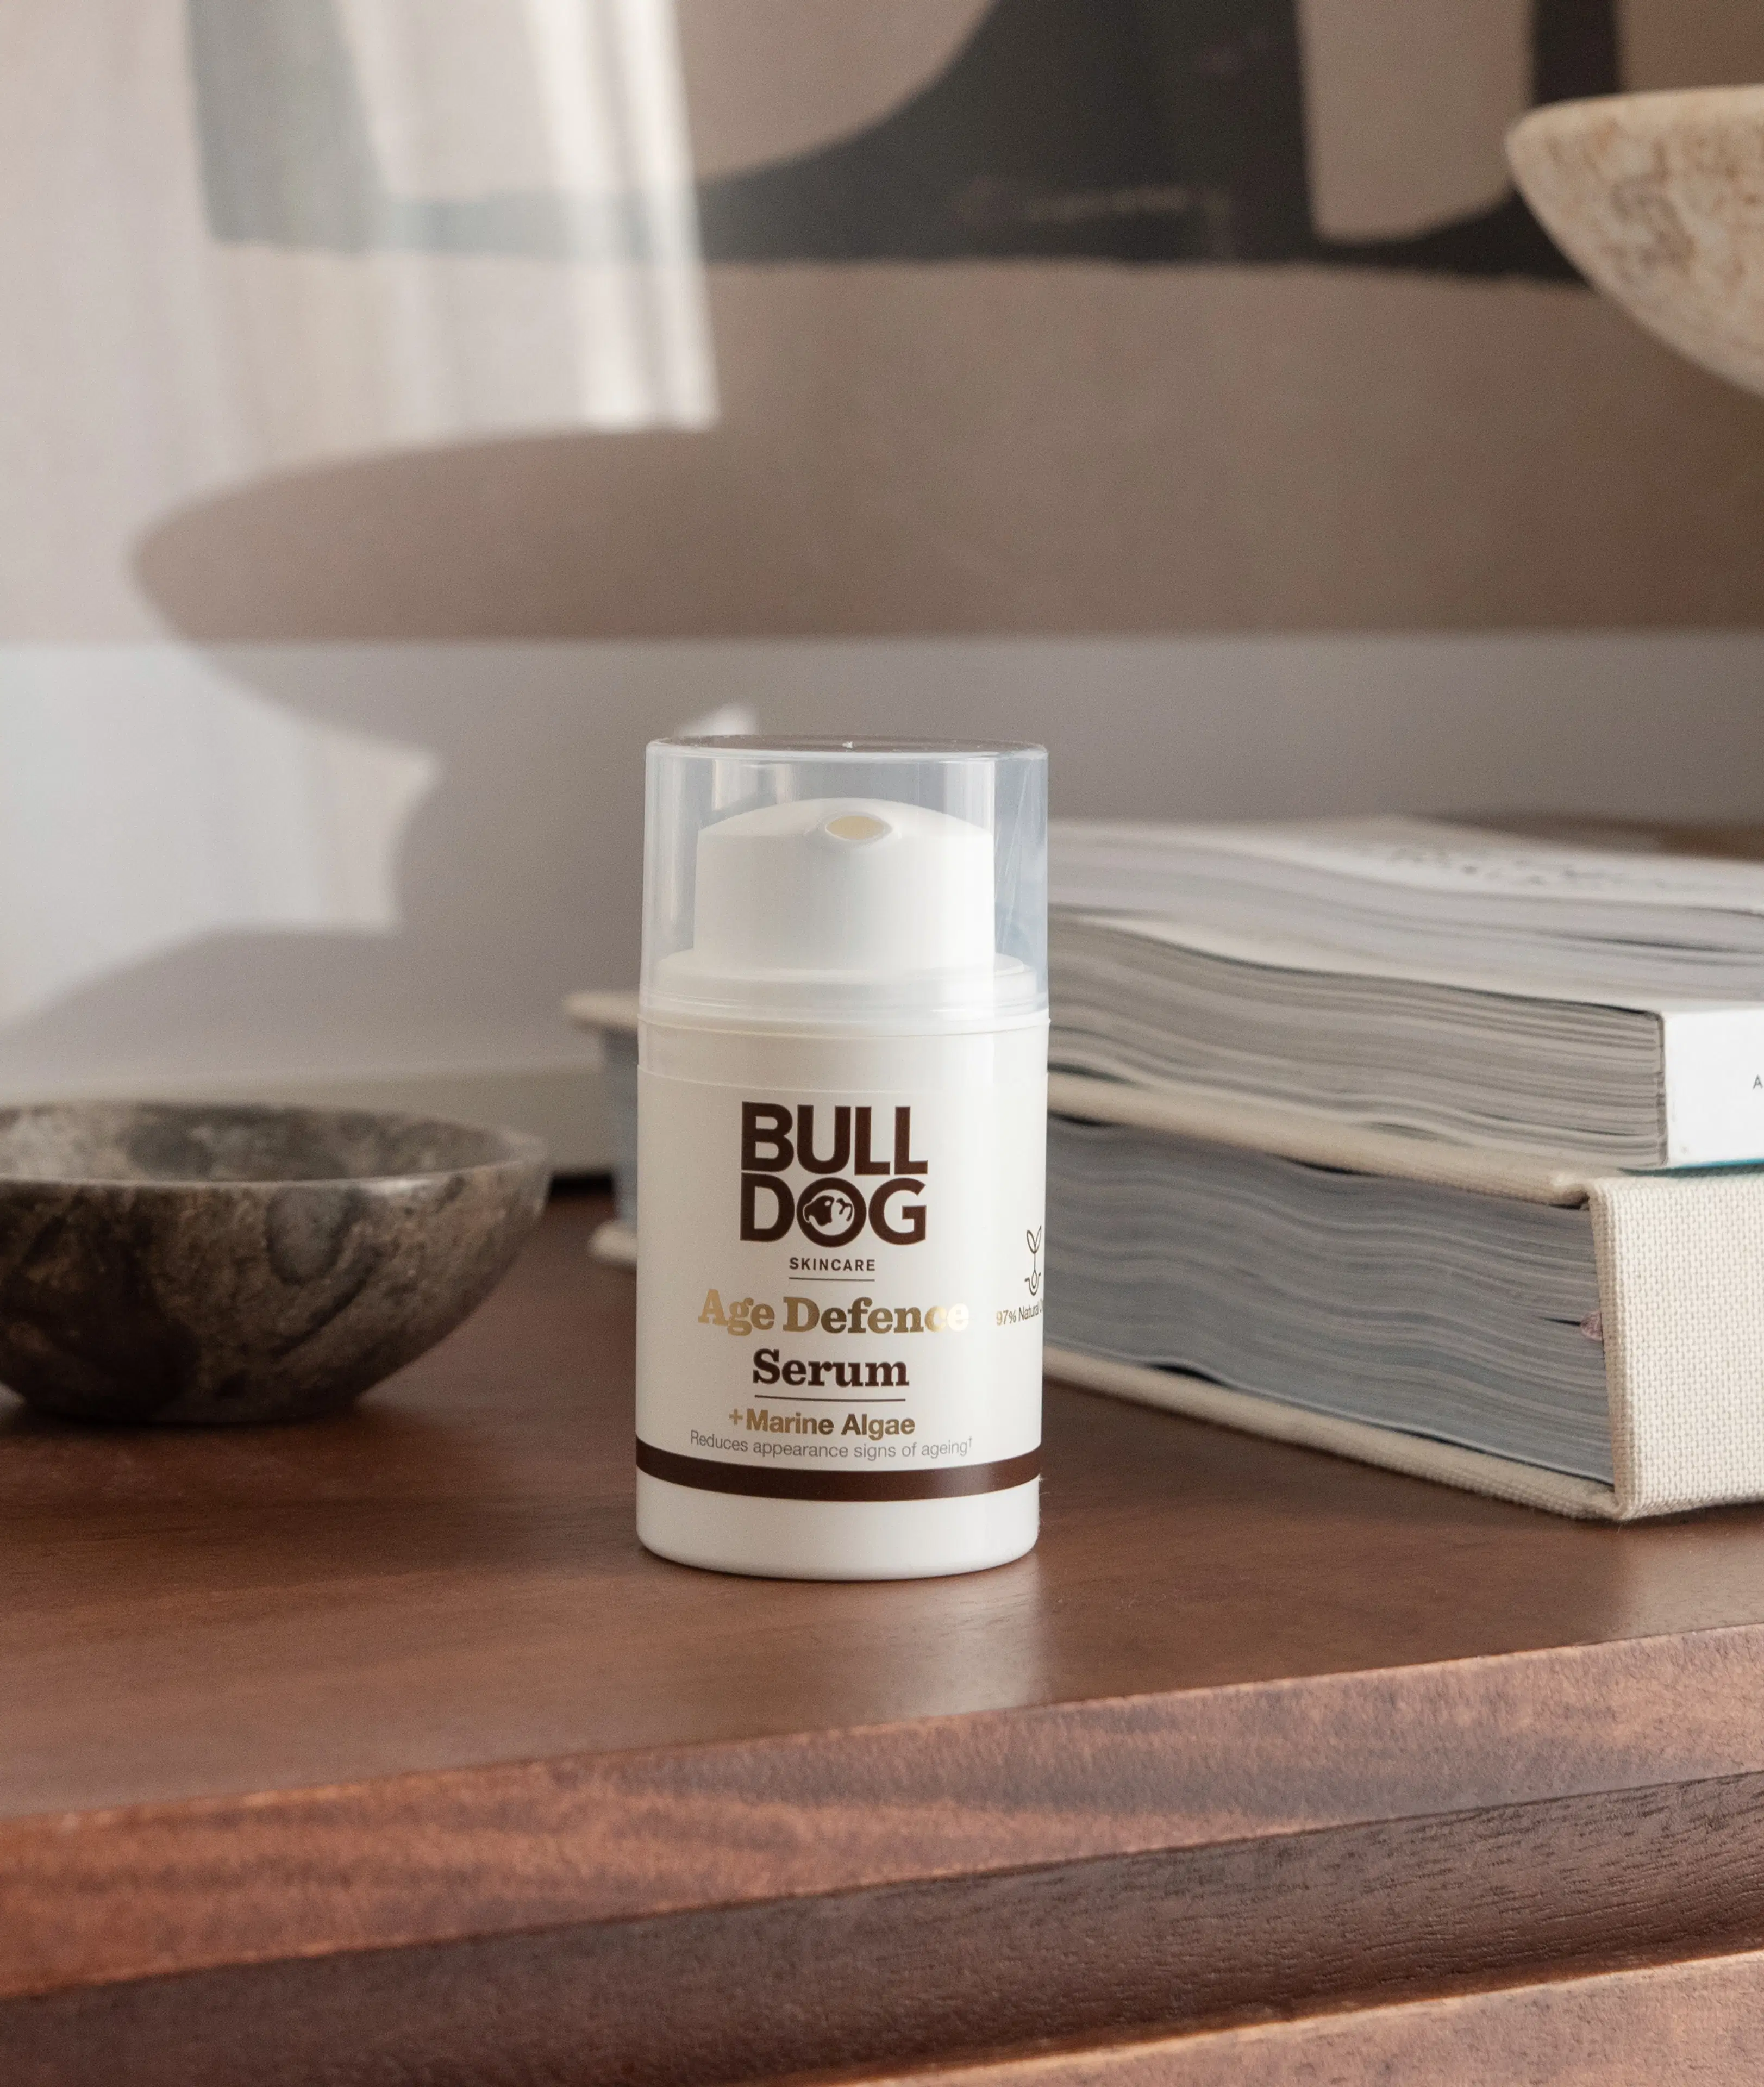 Bulldog Age Defence Seerumi 50 ml